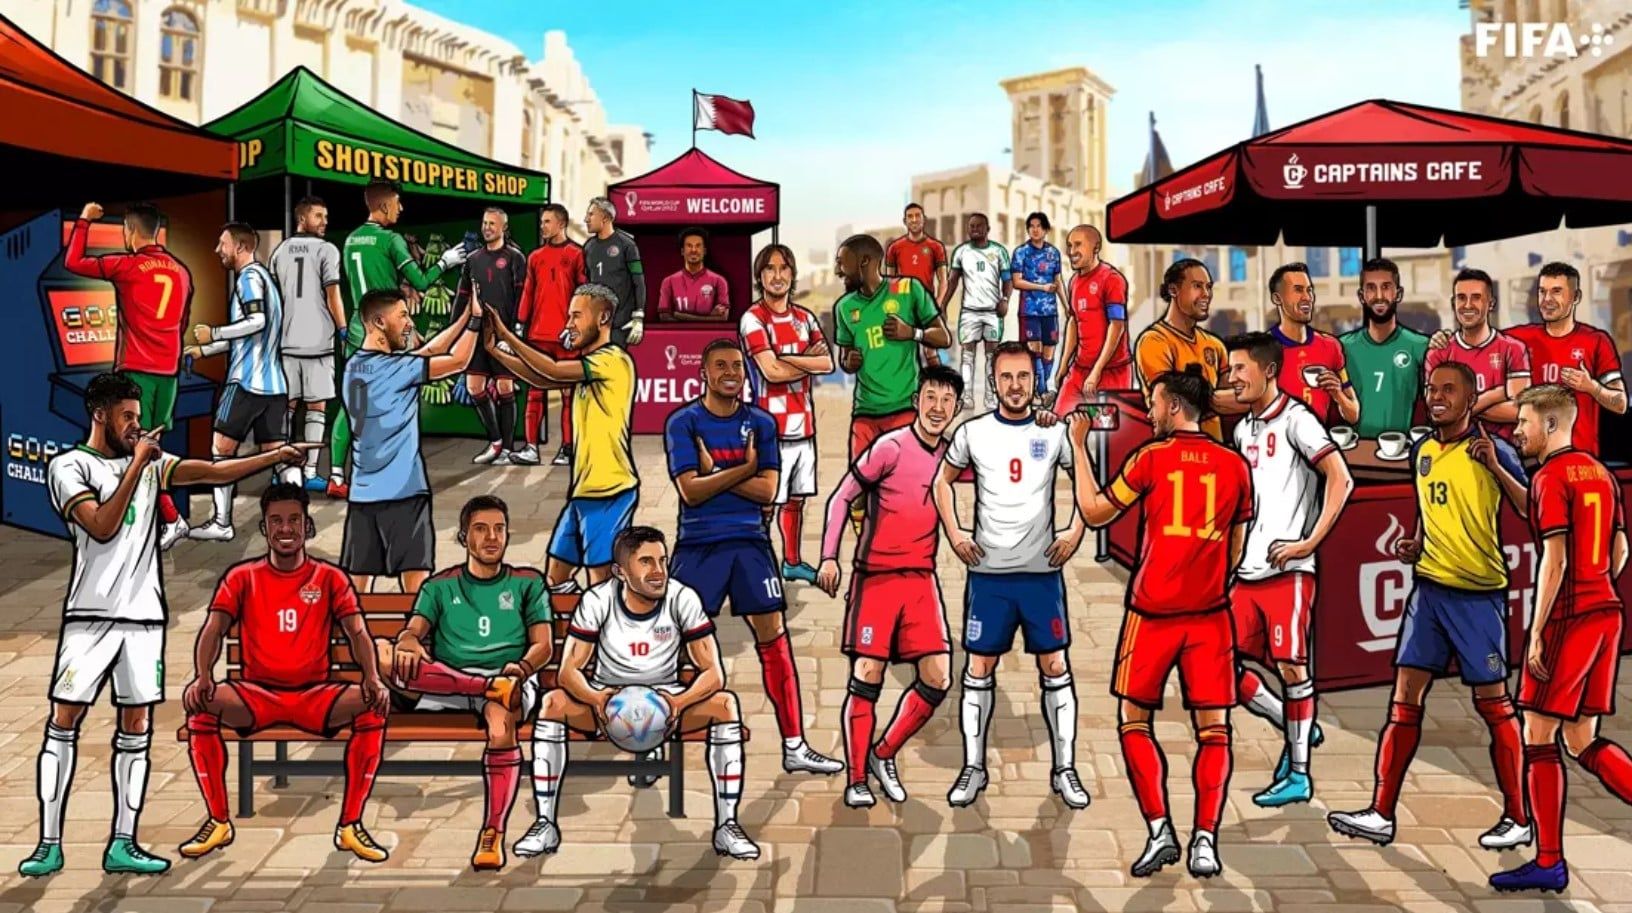 Maillot Portugal Coupe du Monde de Football 2022